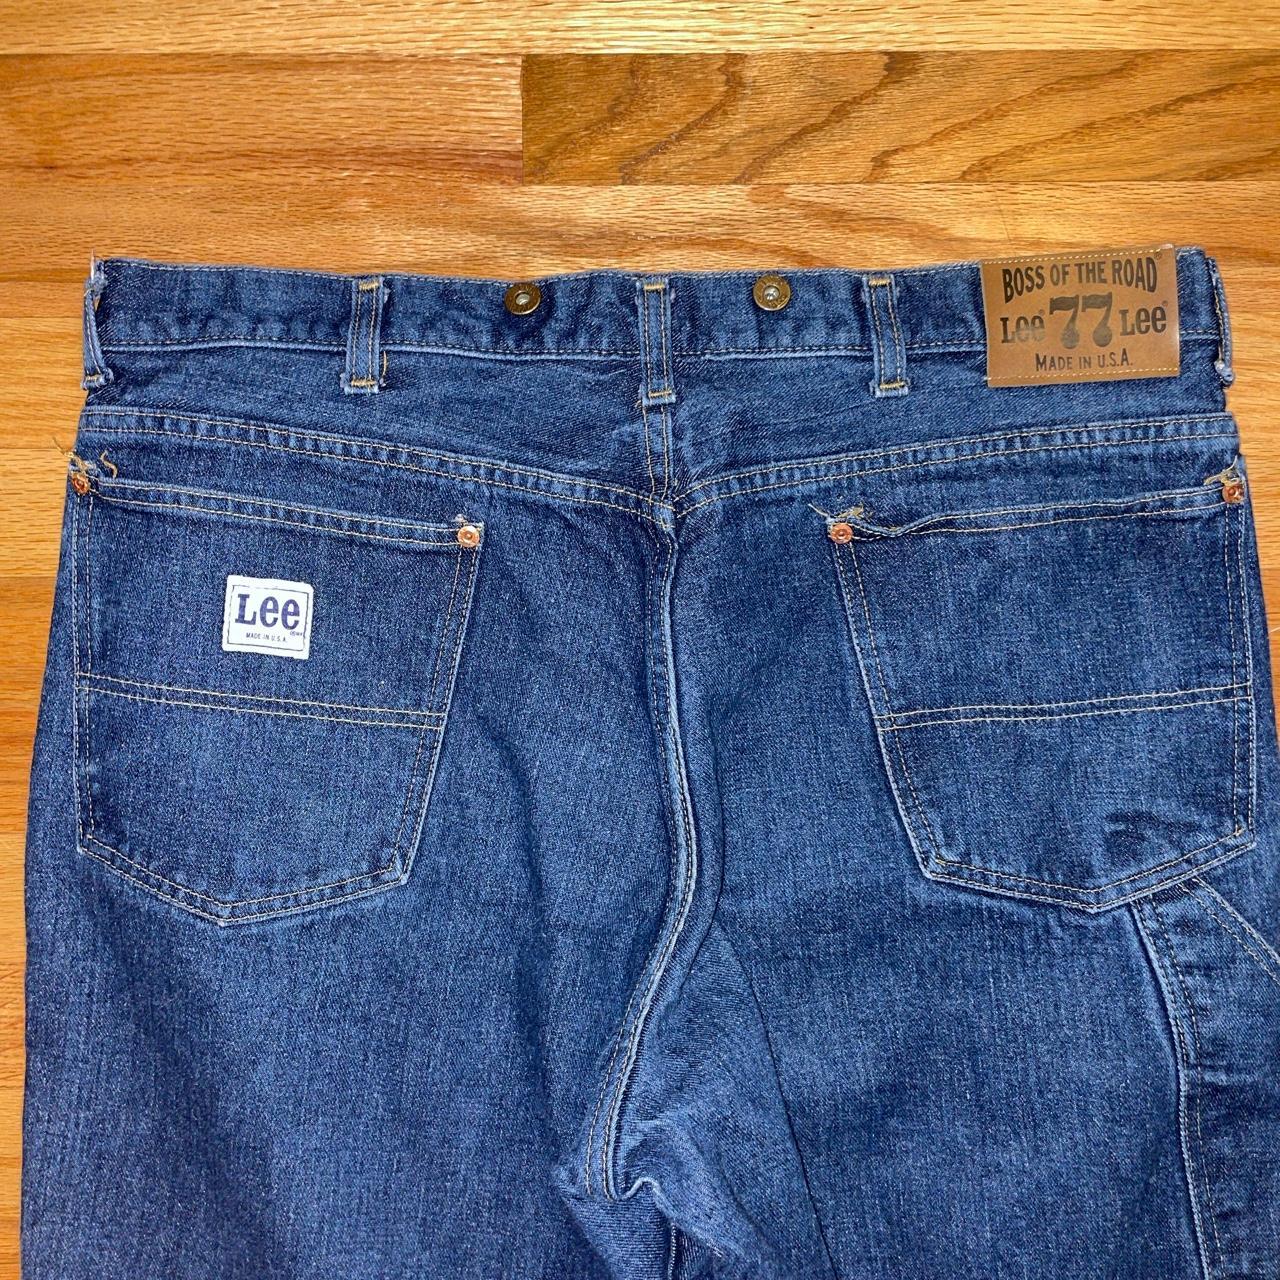 Vintage Lee Boss of the Road jeans Carpenter pants... - Depop